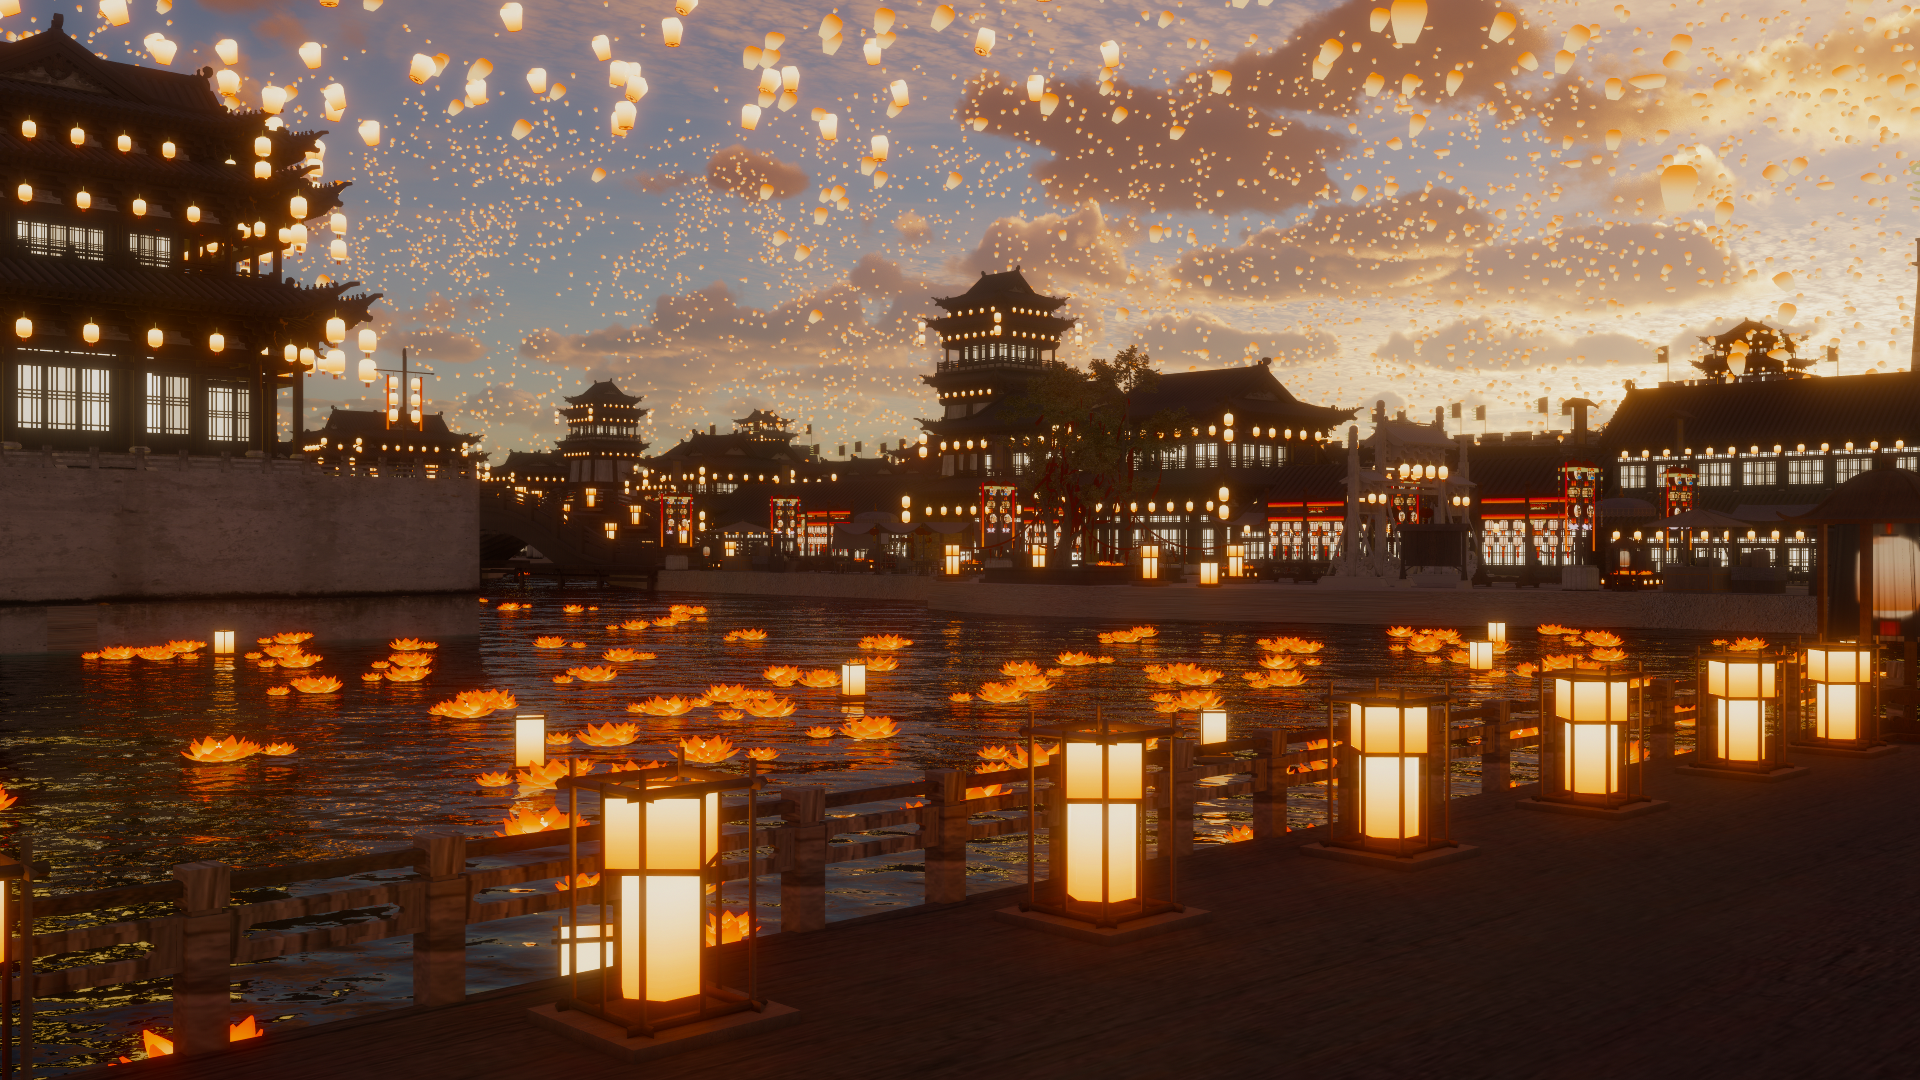 General 1920x1080 anime scenery flowers lantern Lantern Festival city lights clouds